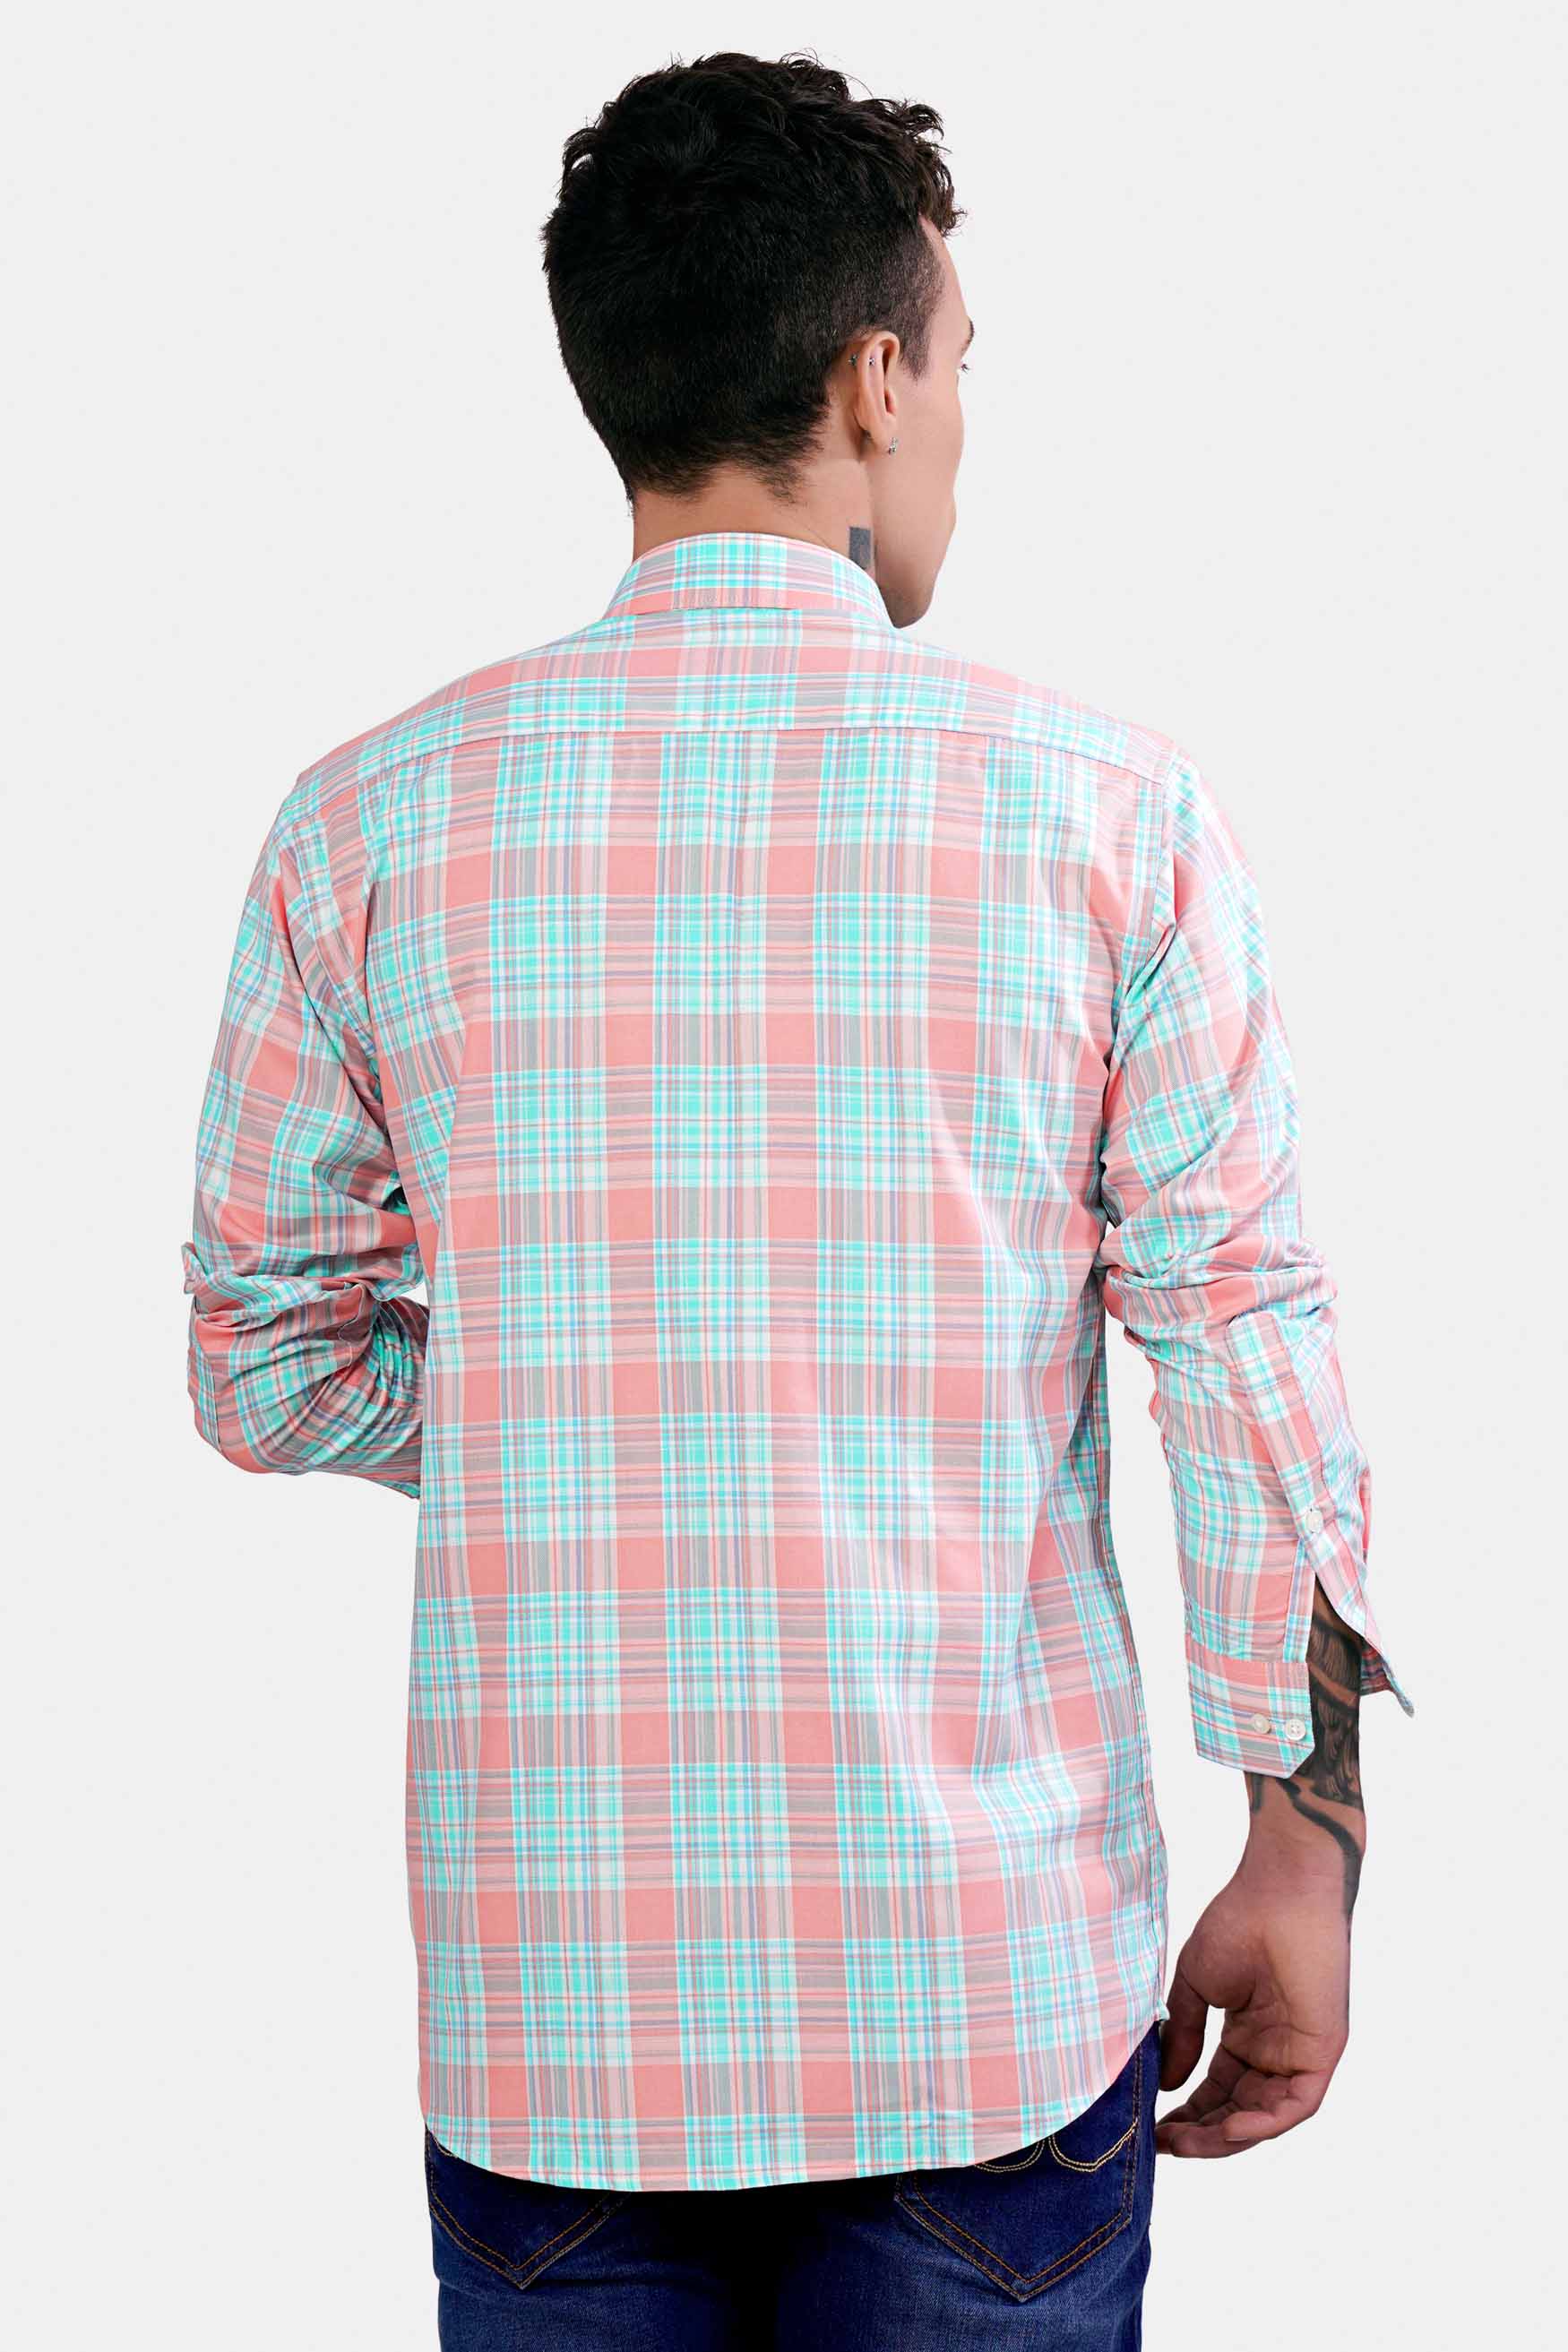 Blush Pink and Turquoise Blue Twill Plaid Premium Cotton Shirt